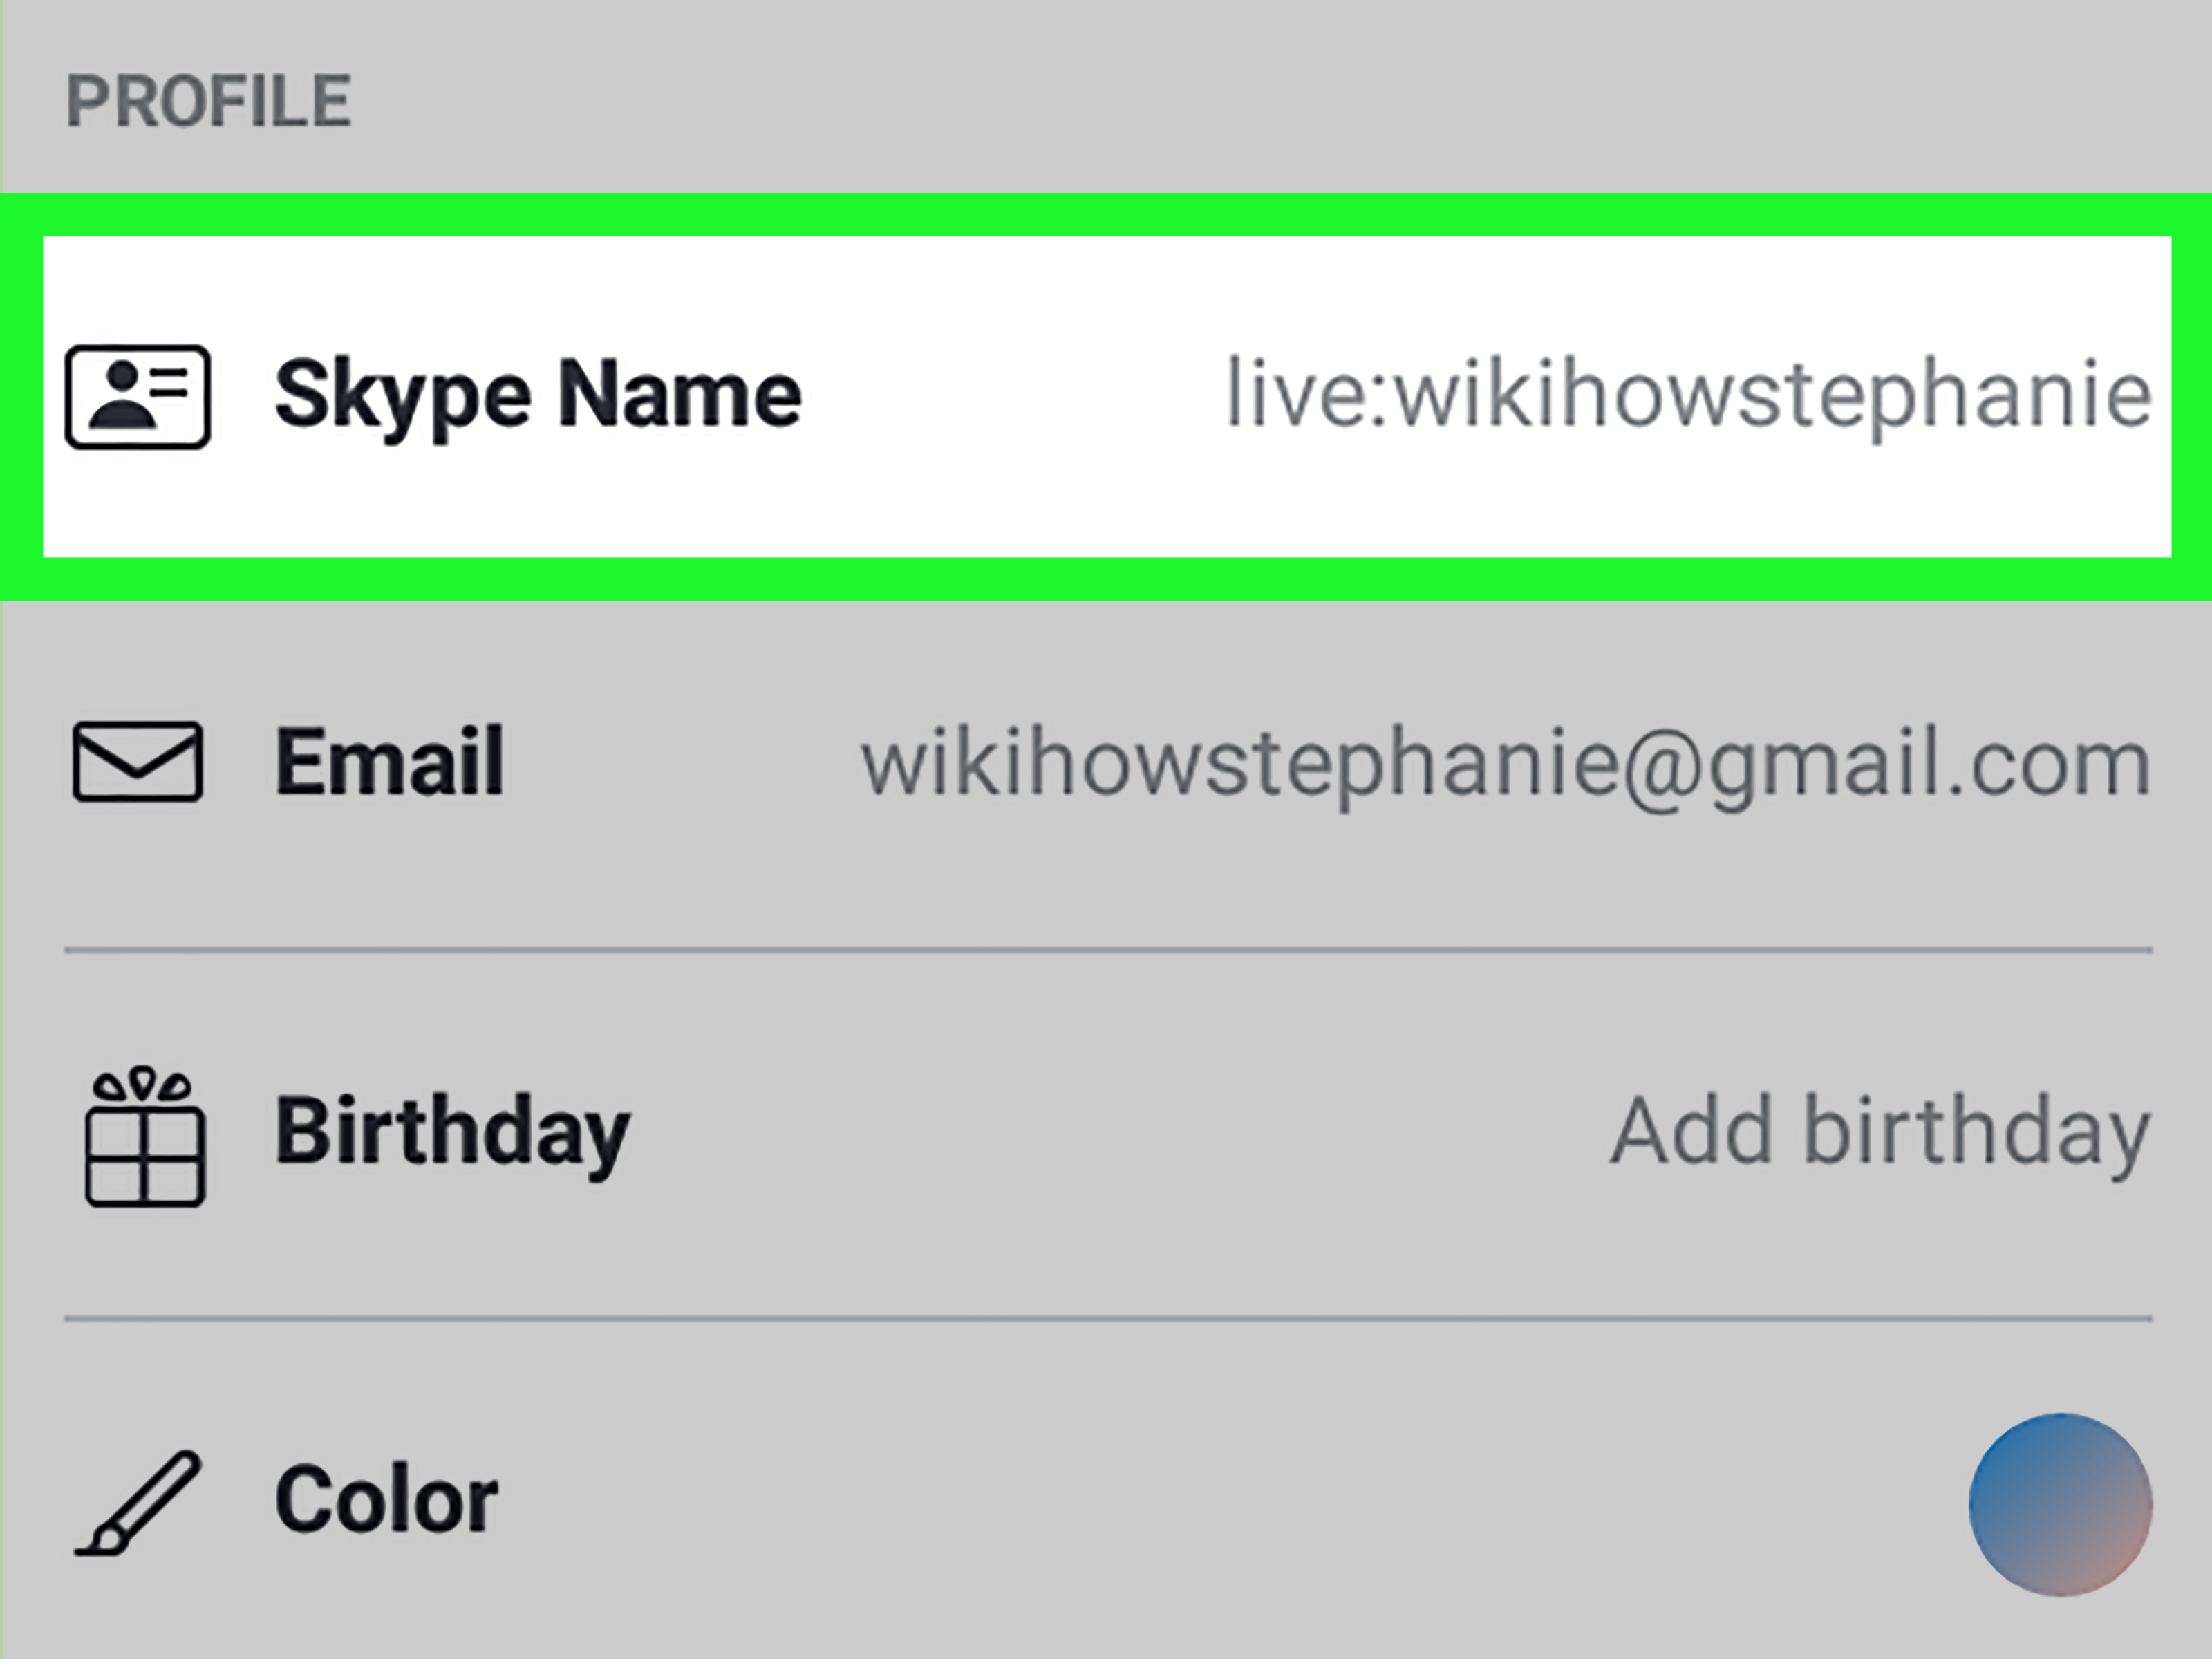 remove skype icon from taskbar